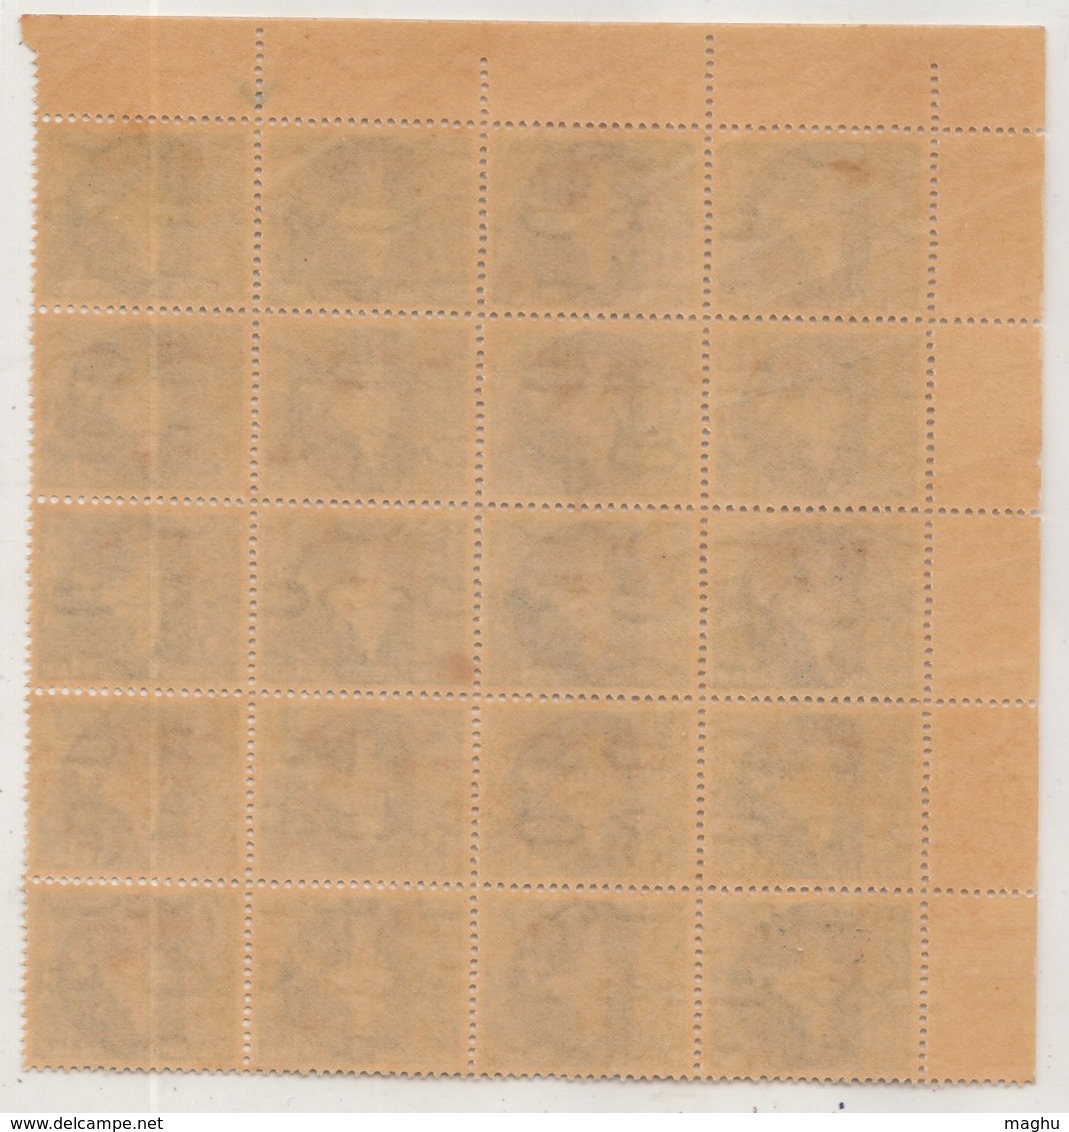 Block Of 20, 1np, Oveperprint Of 'Vietnam' On Map Series, Watermark Ashokan, India MNH 1963 - Military Service Stamp